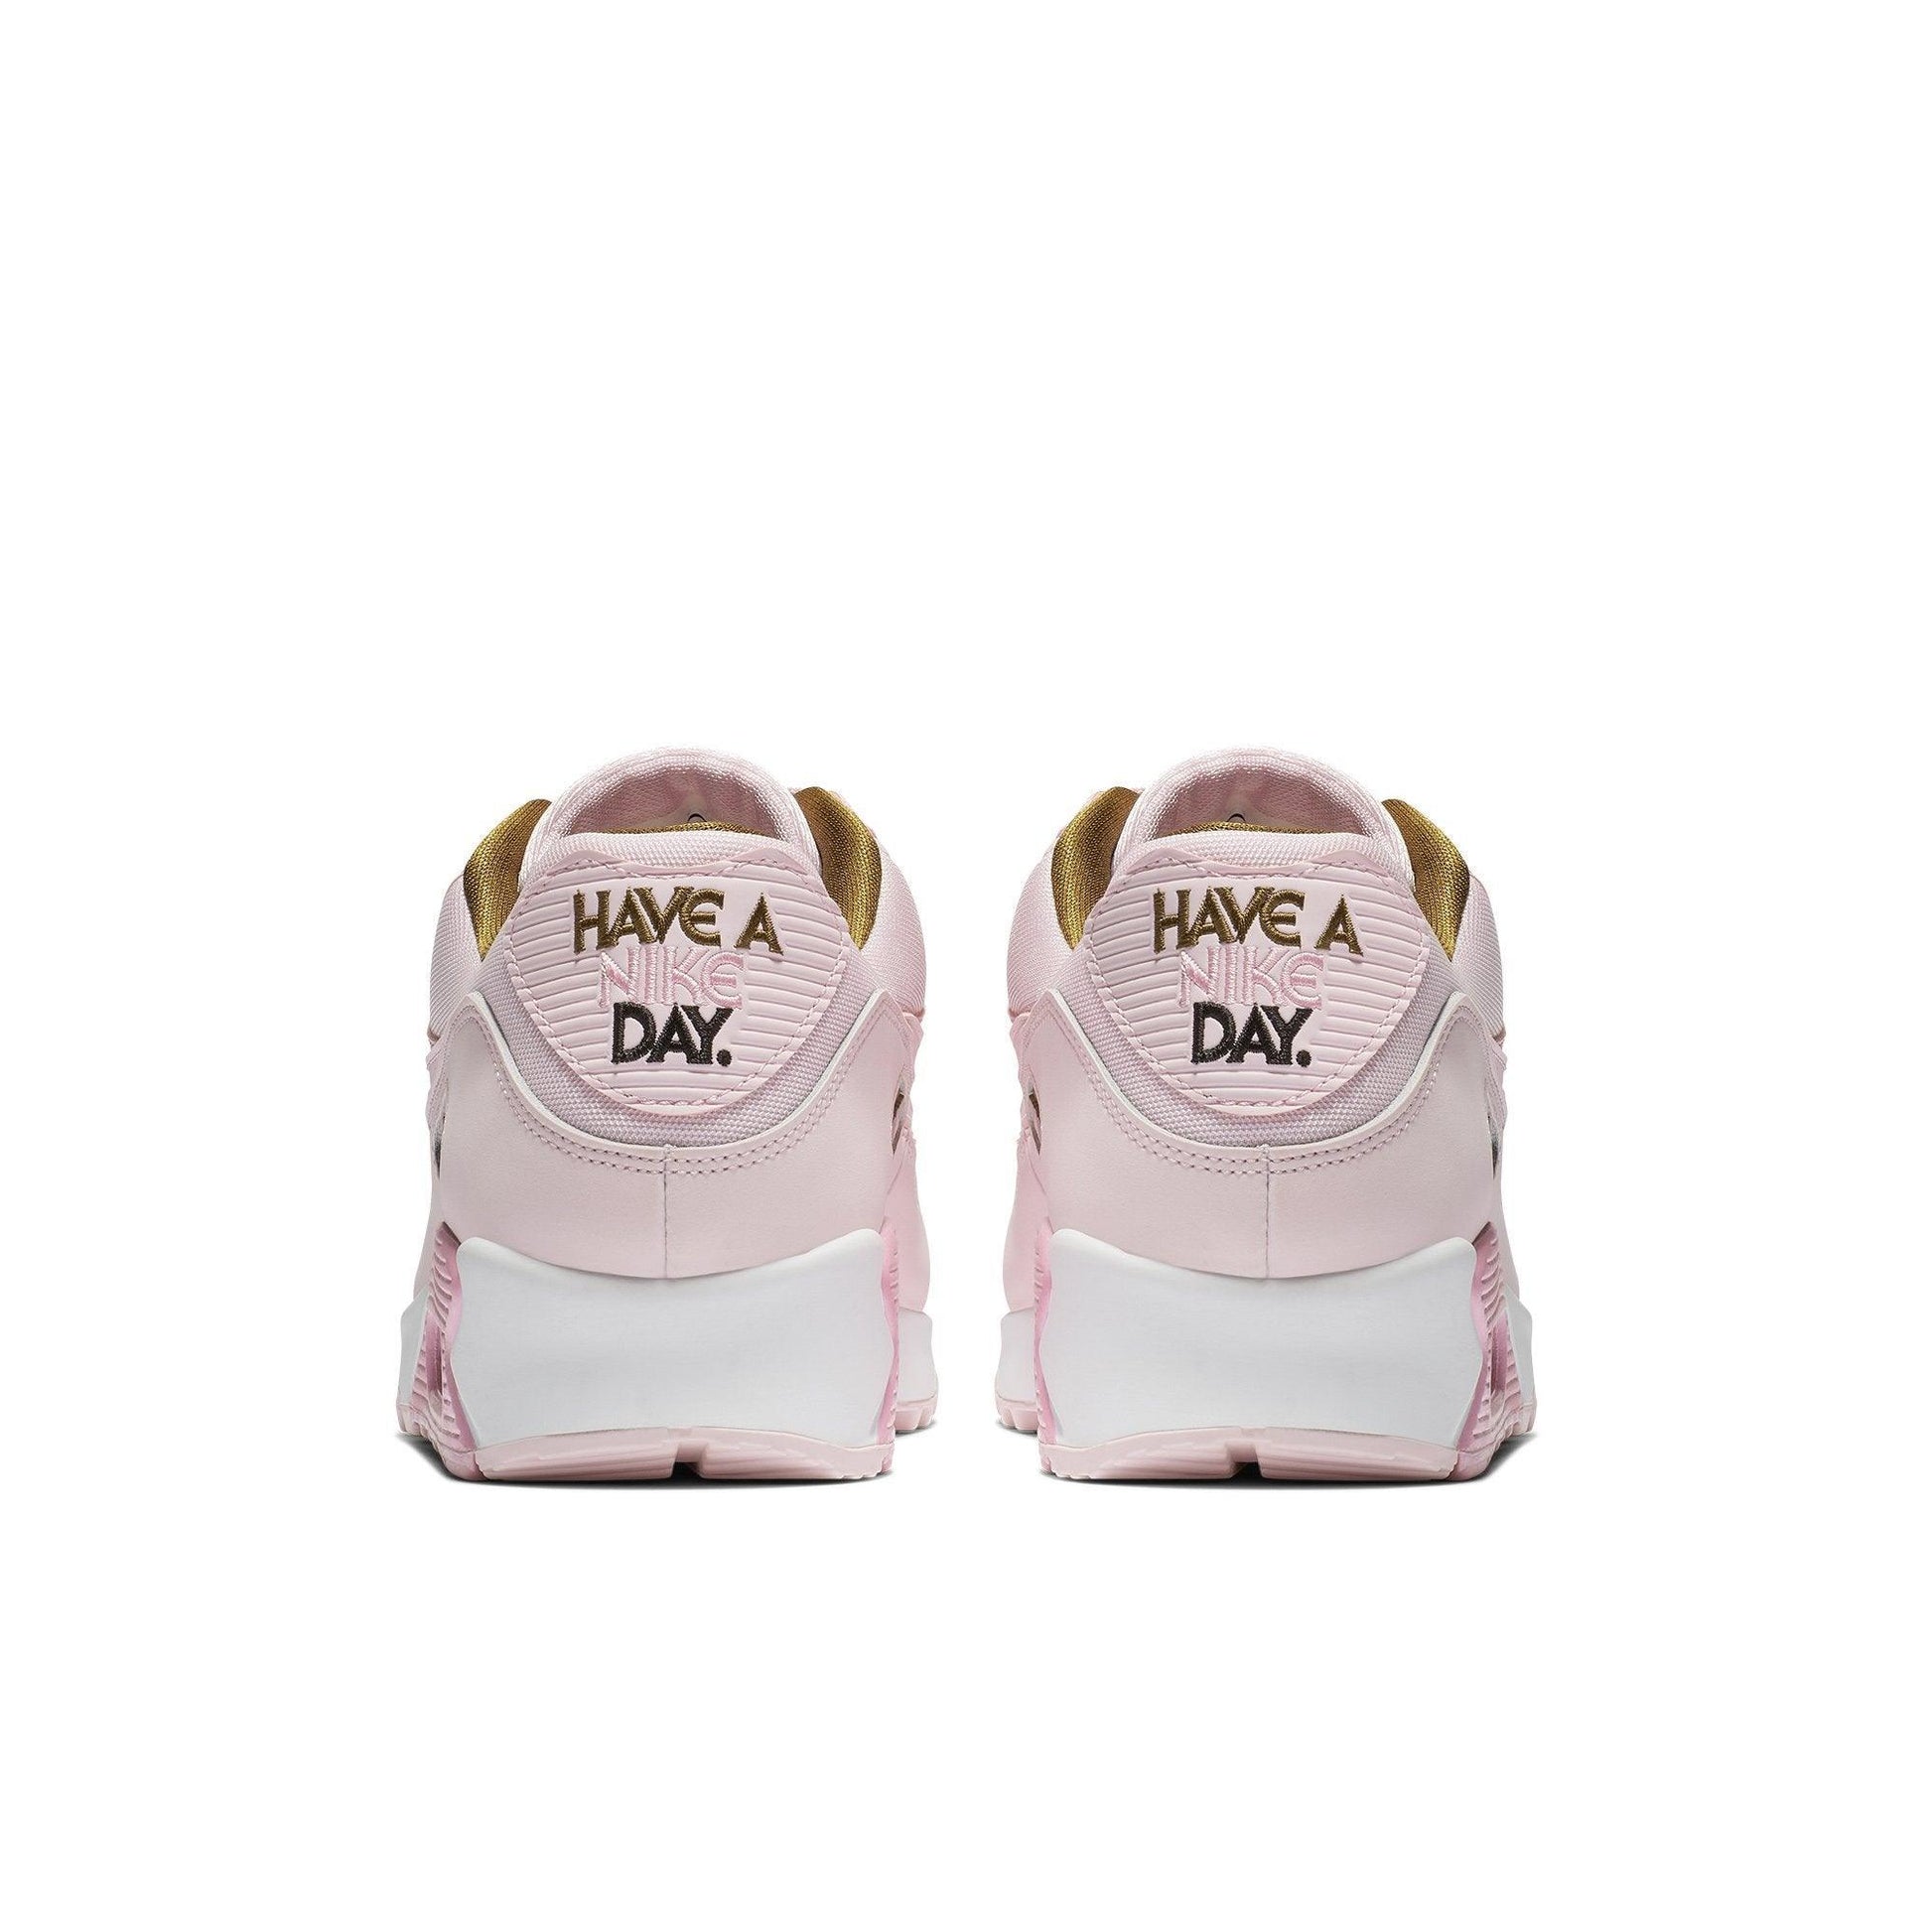 Nike Nike official Nike Air Max 90 SE women's sneakers air cushion casual shoes 881105